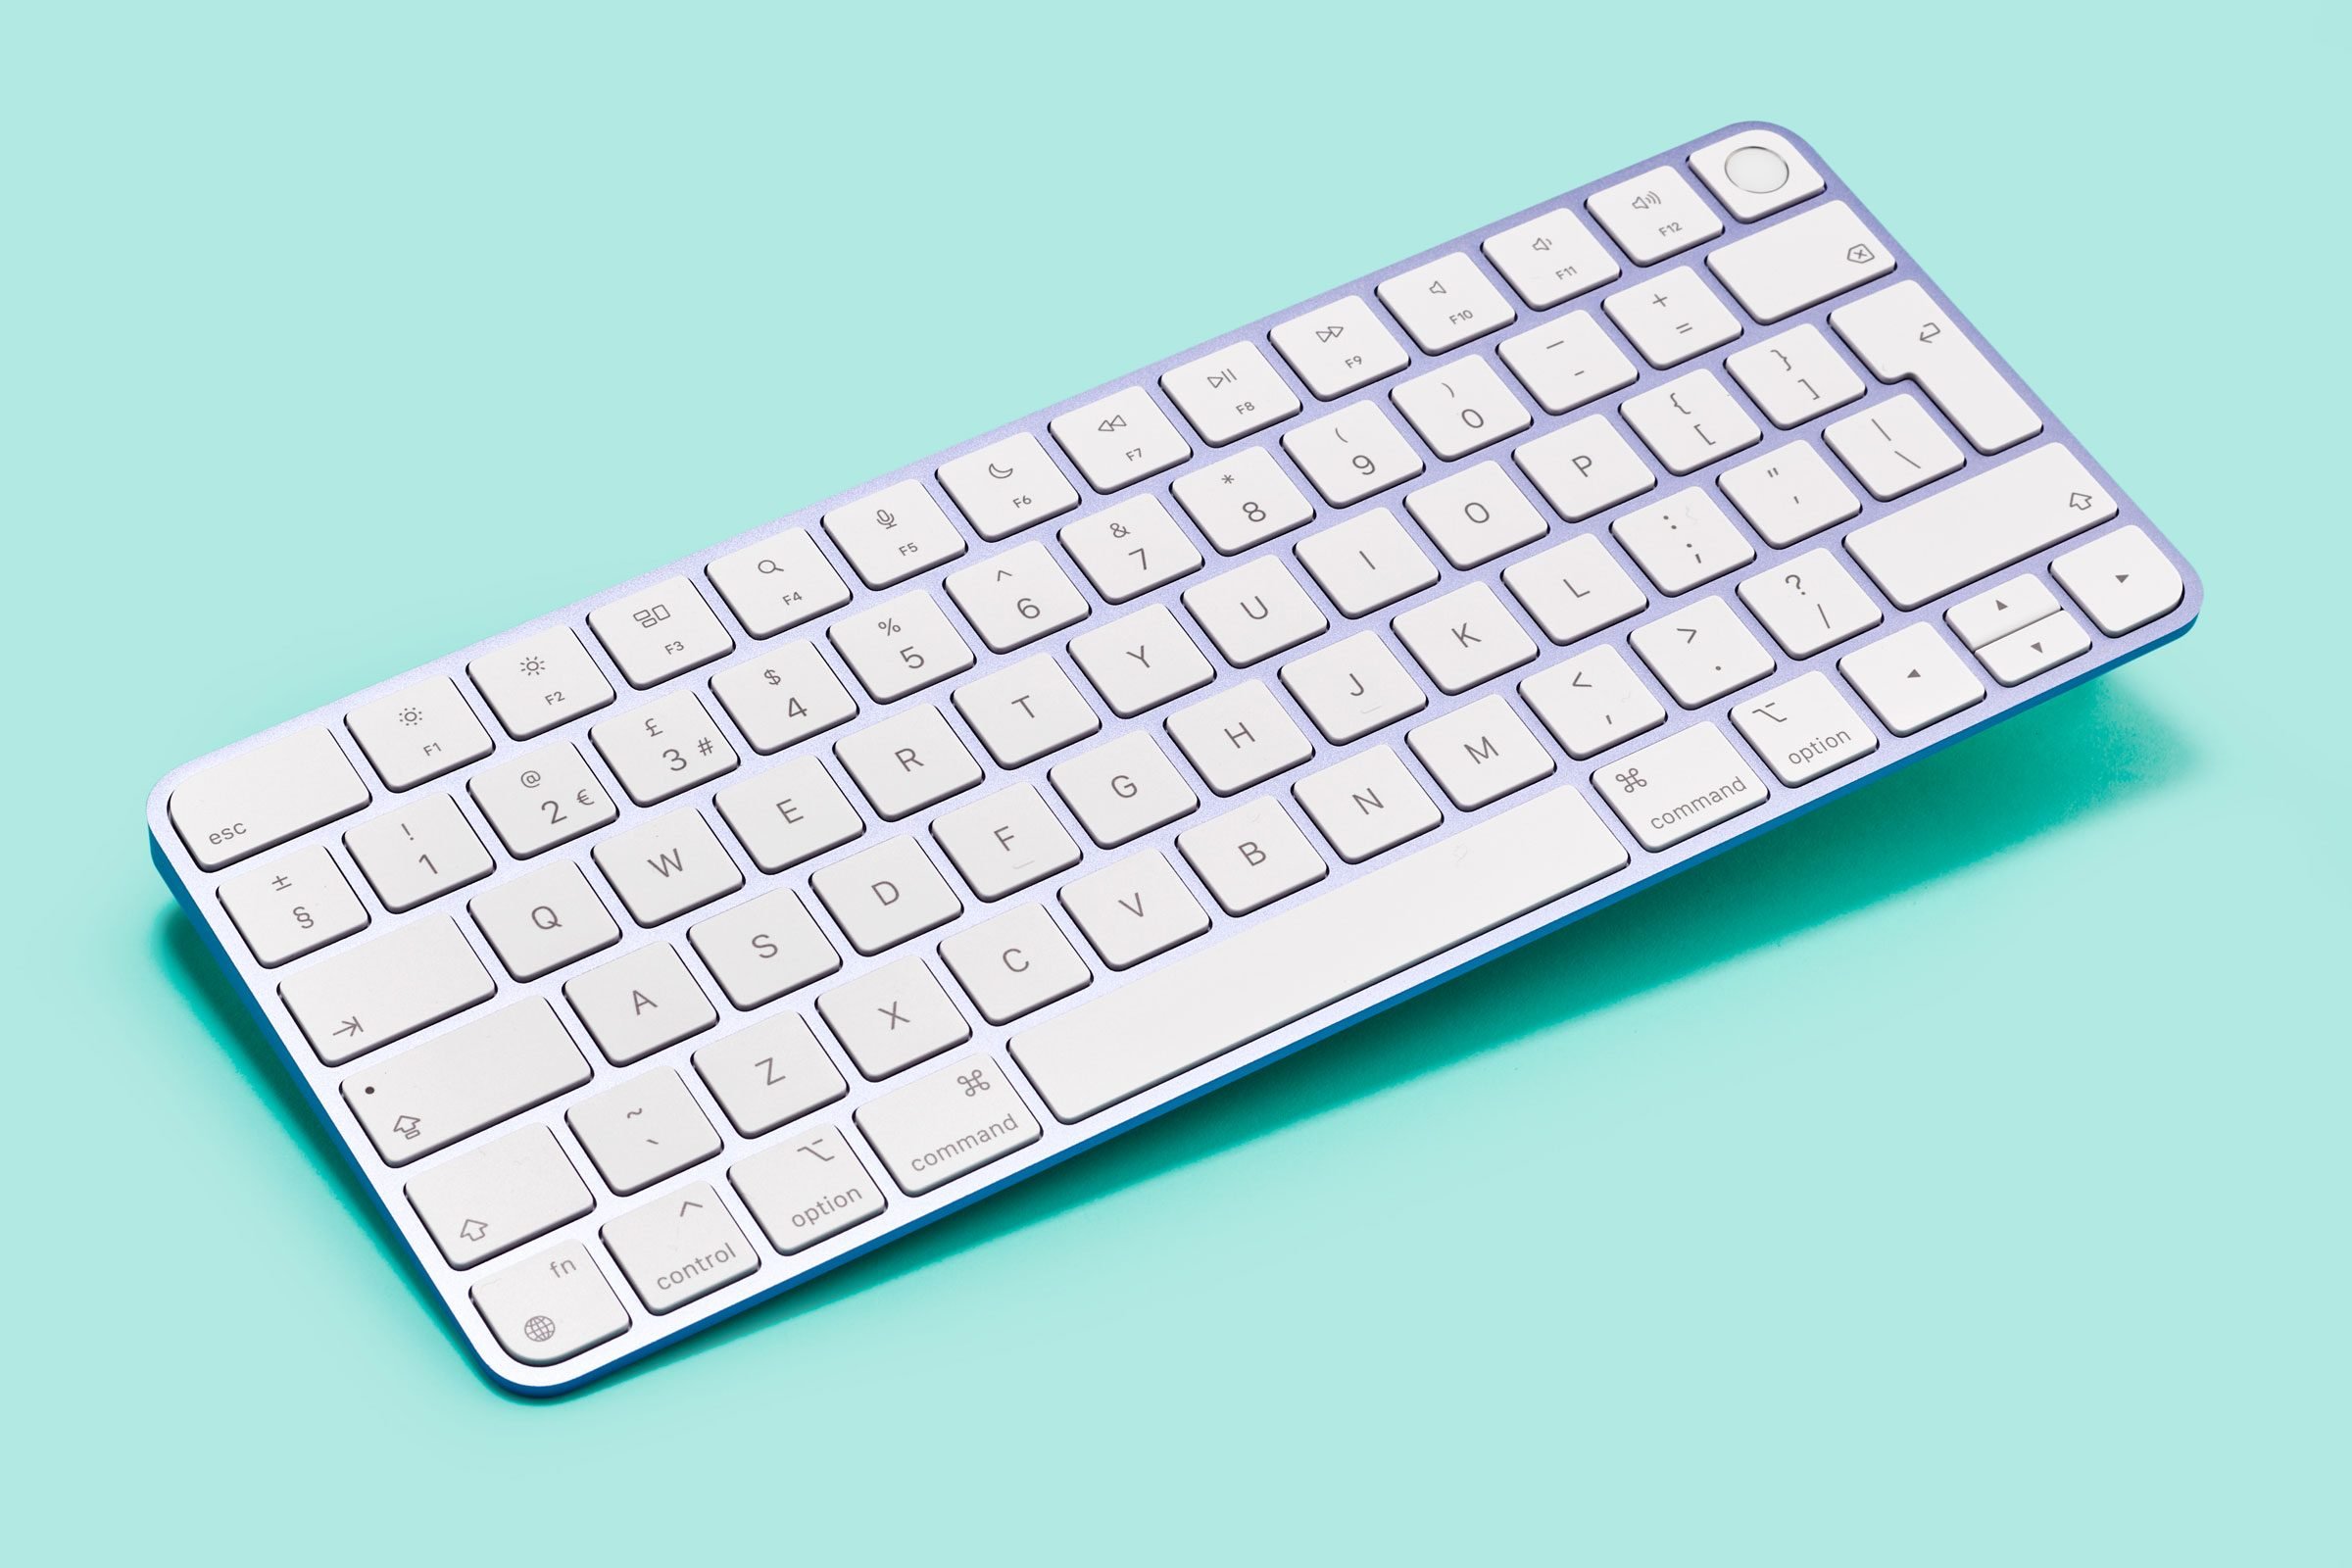 Mac Shortcuts in 2023: Helpful Keyboard Shortcuts to Know